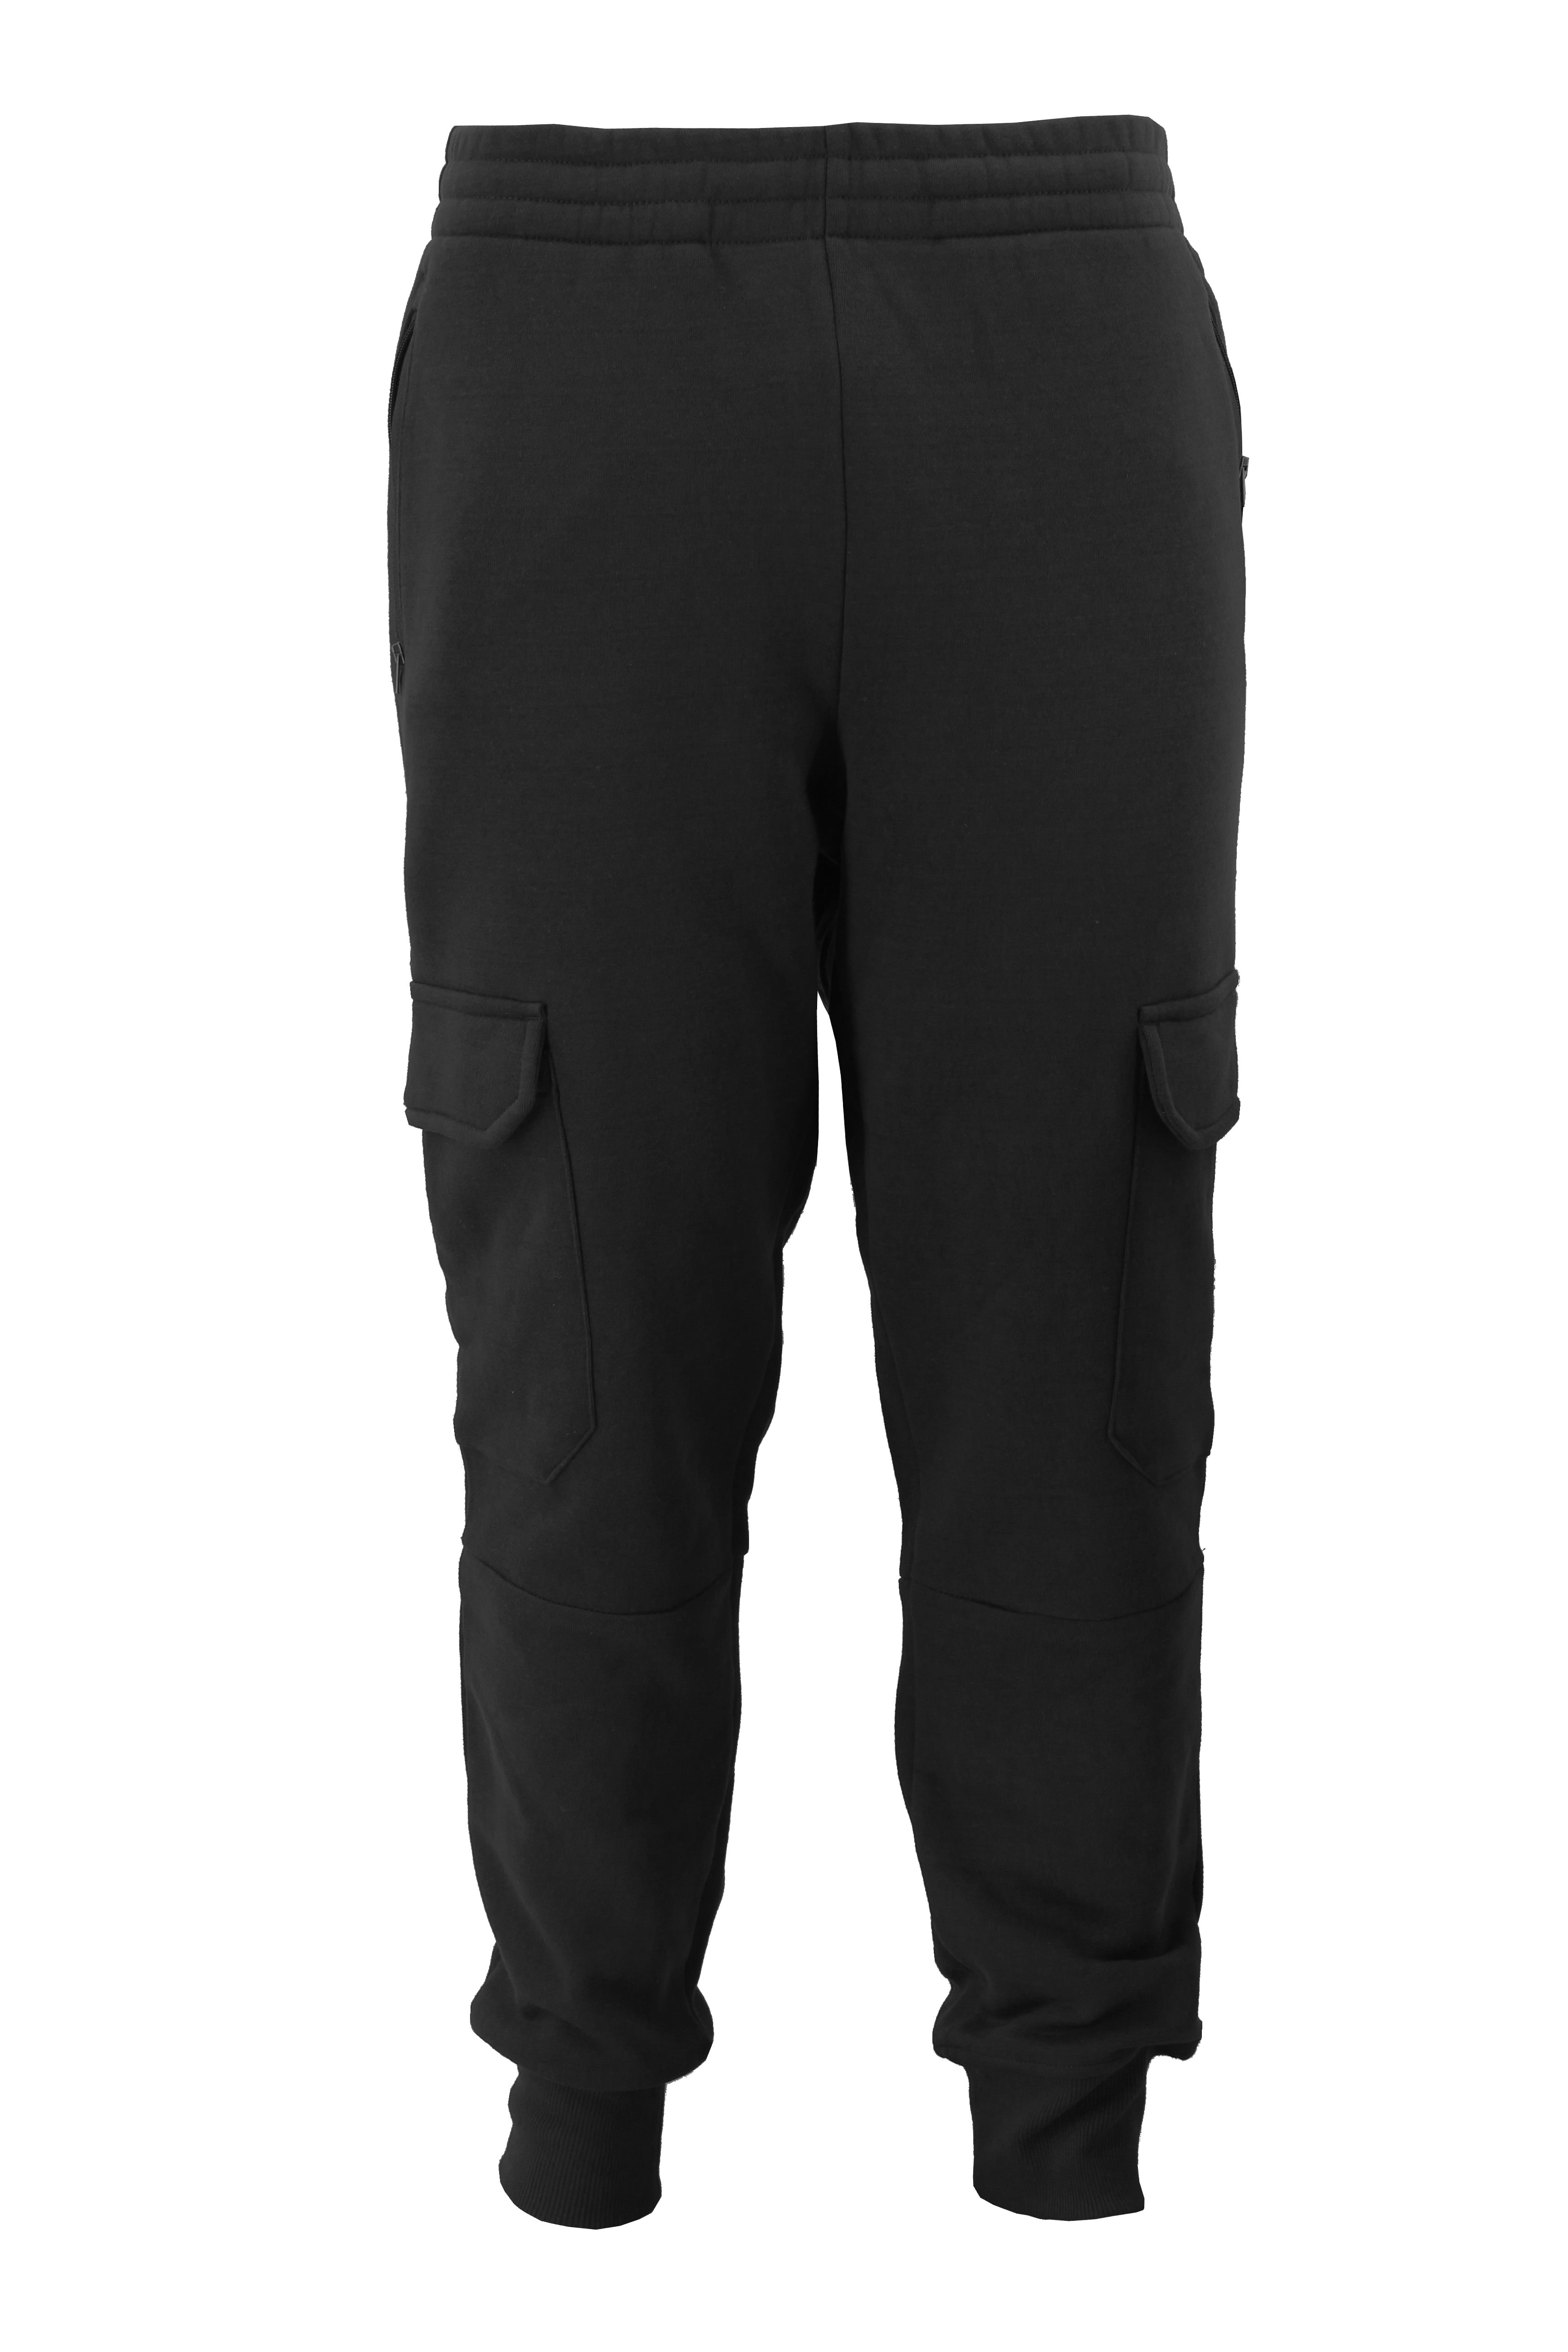 LM - Men's Sweatpants Sport Gym Workout Fitness Cargo Jogger Pants #602 ...